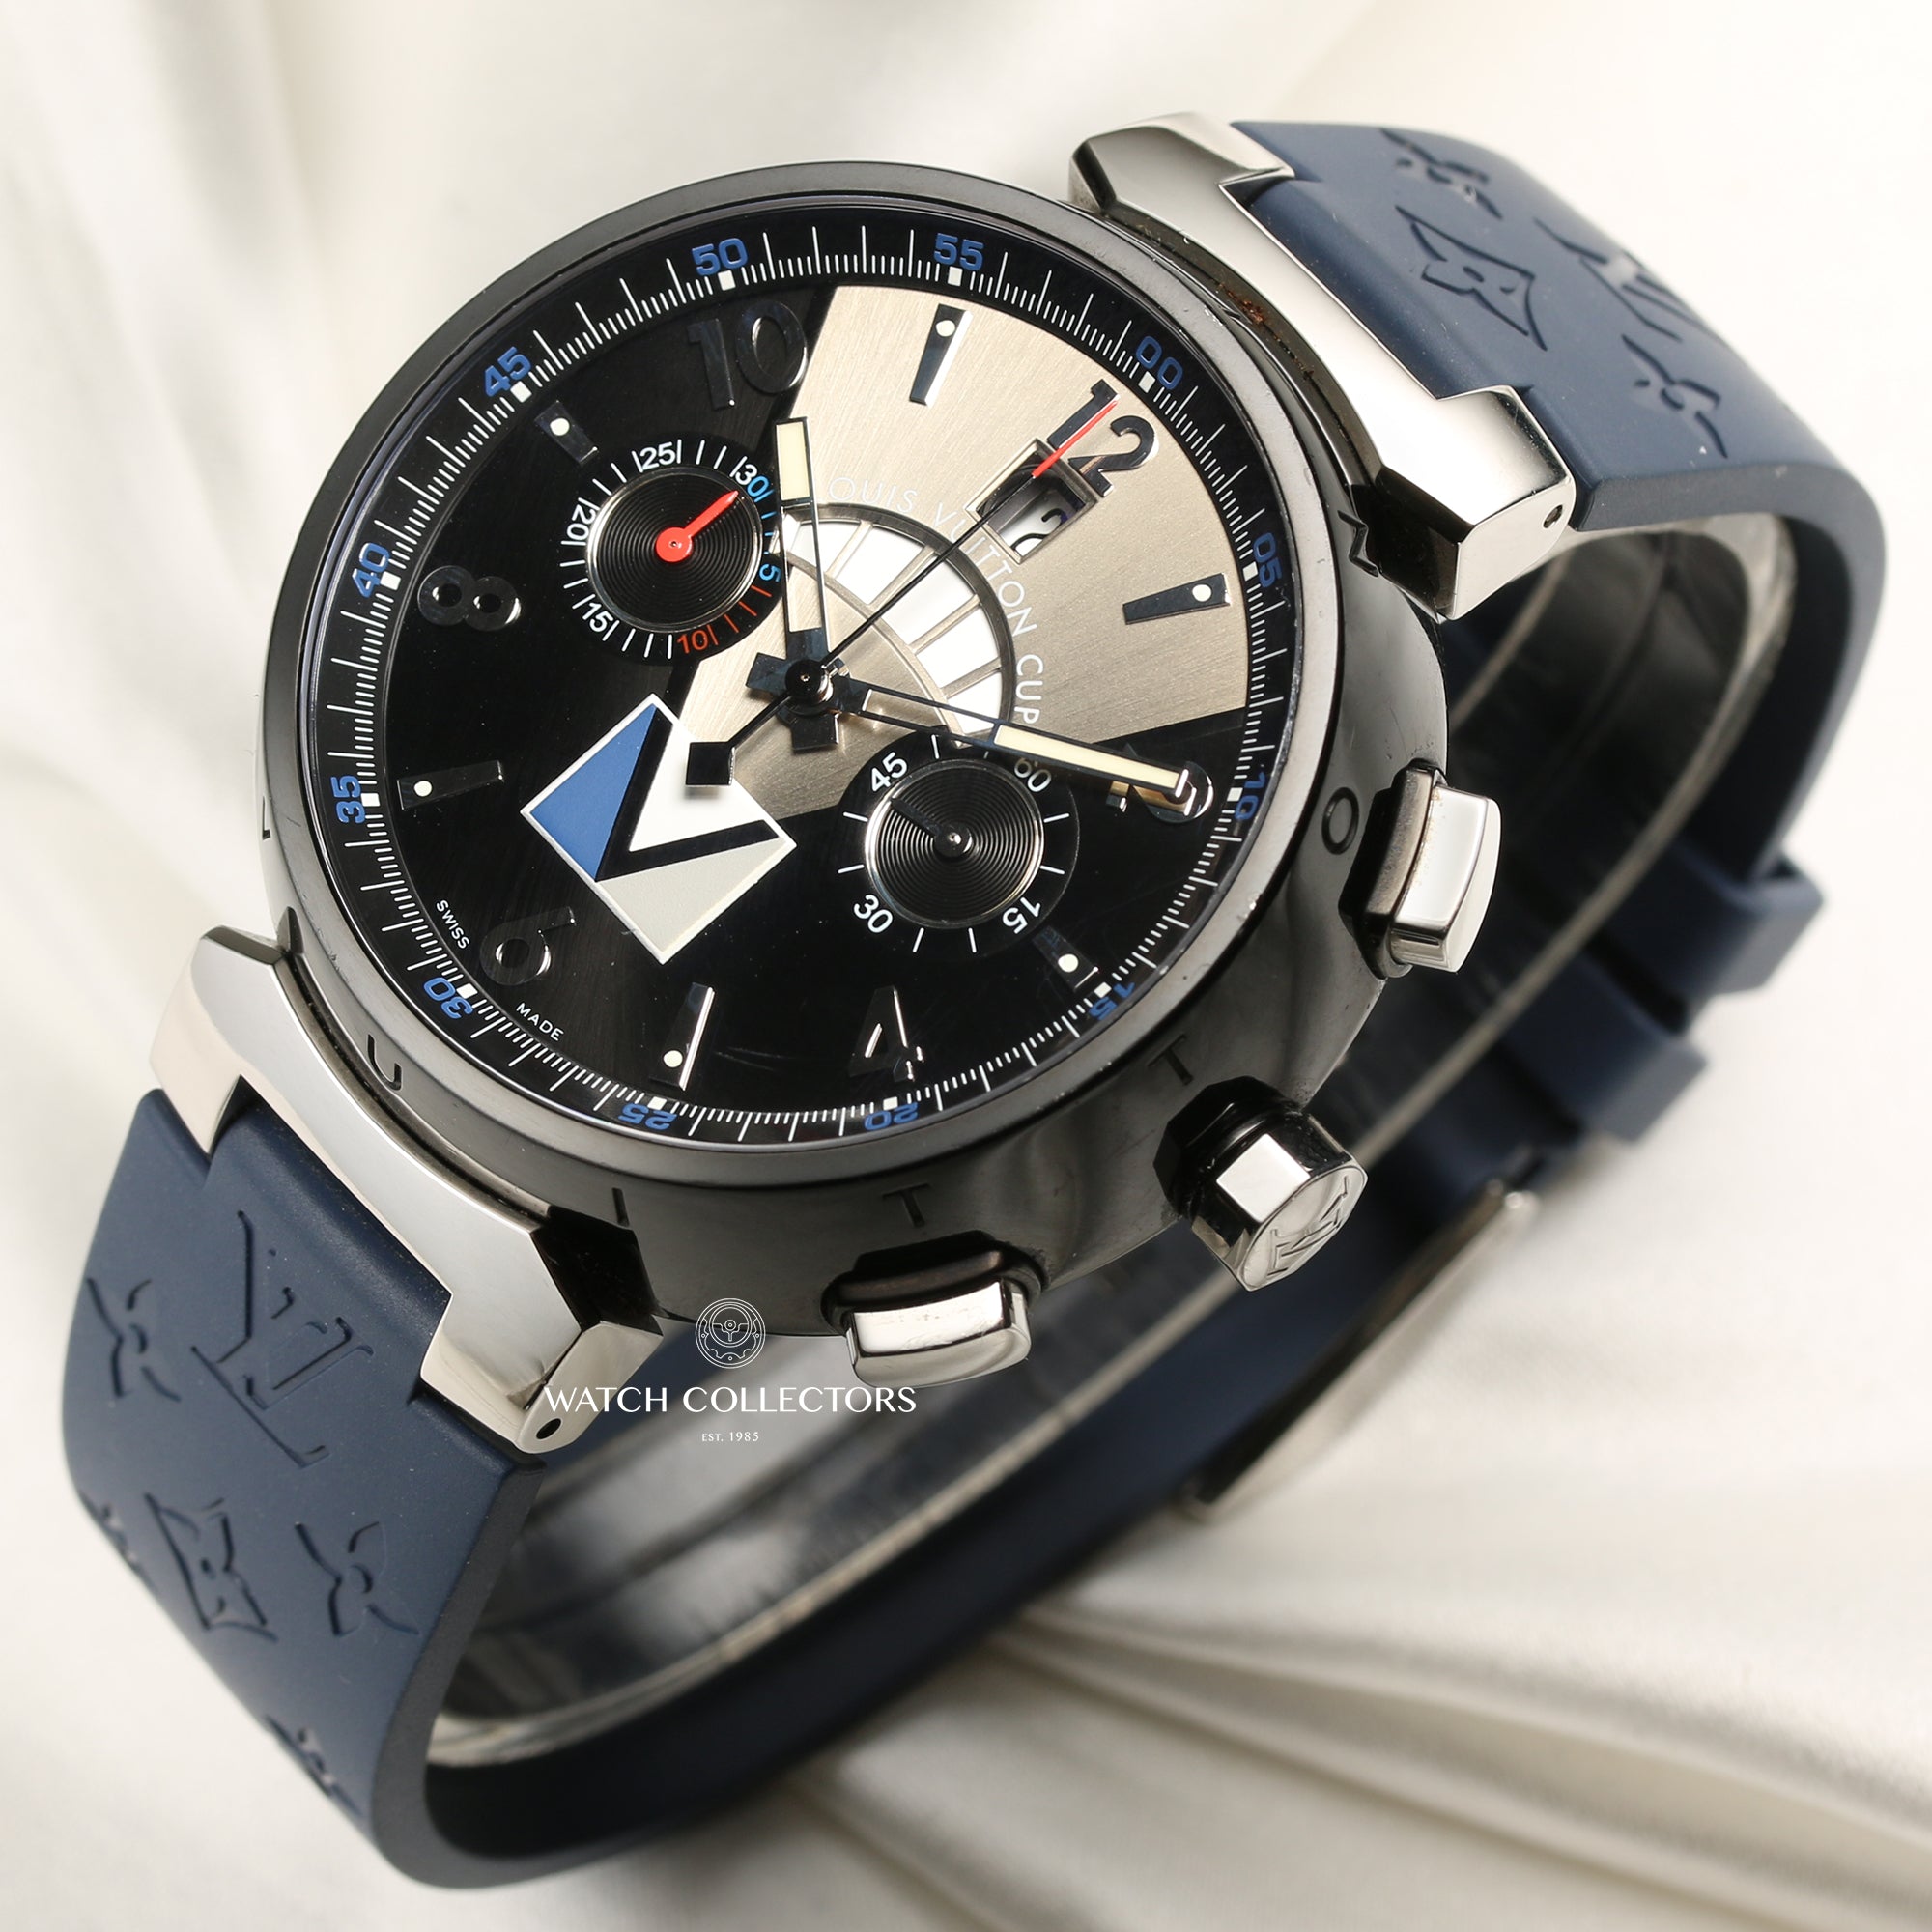 Louis Vuitton Tambour Regatta LV Cup Automatic Chronograph Q102G - Watch Rapport